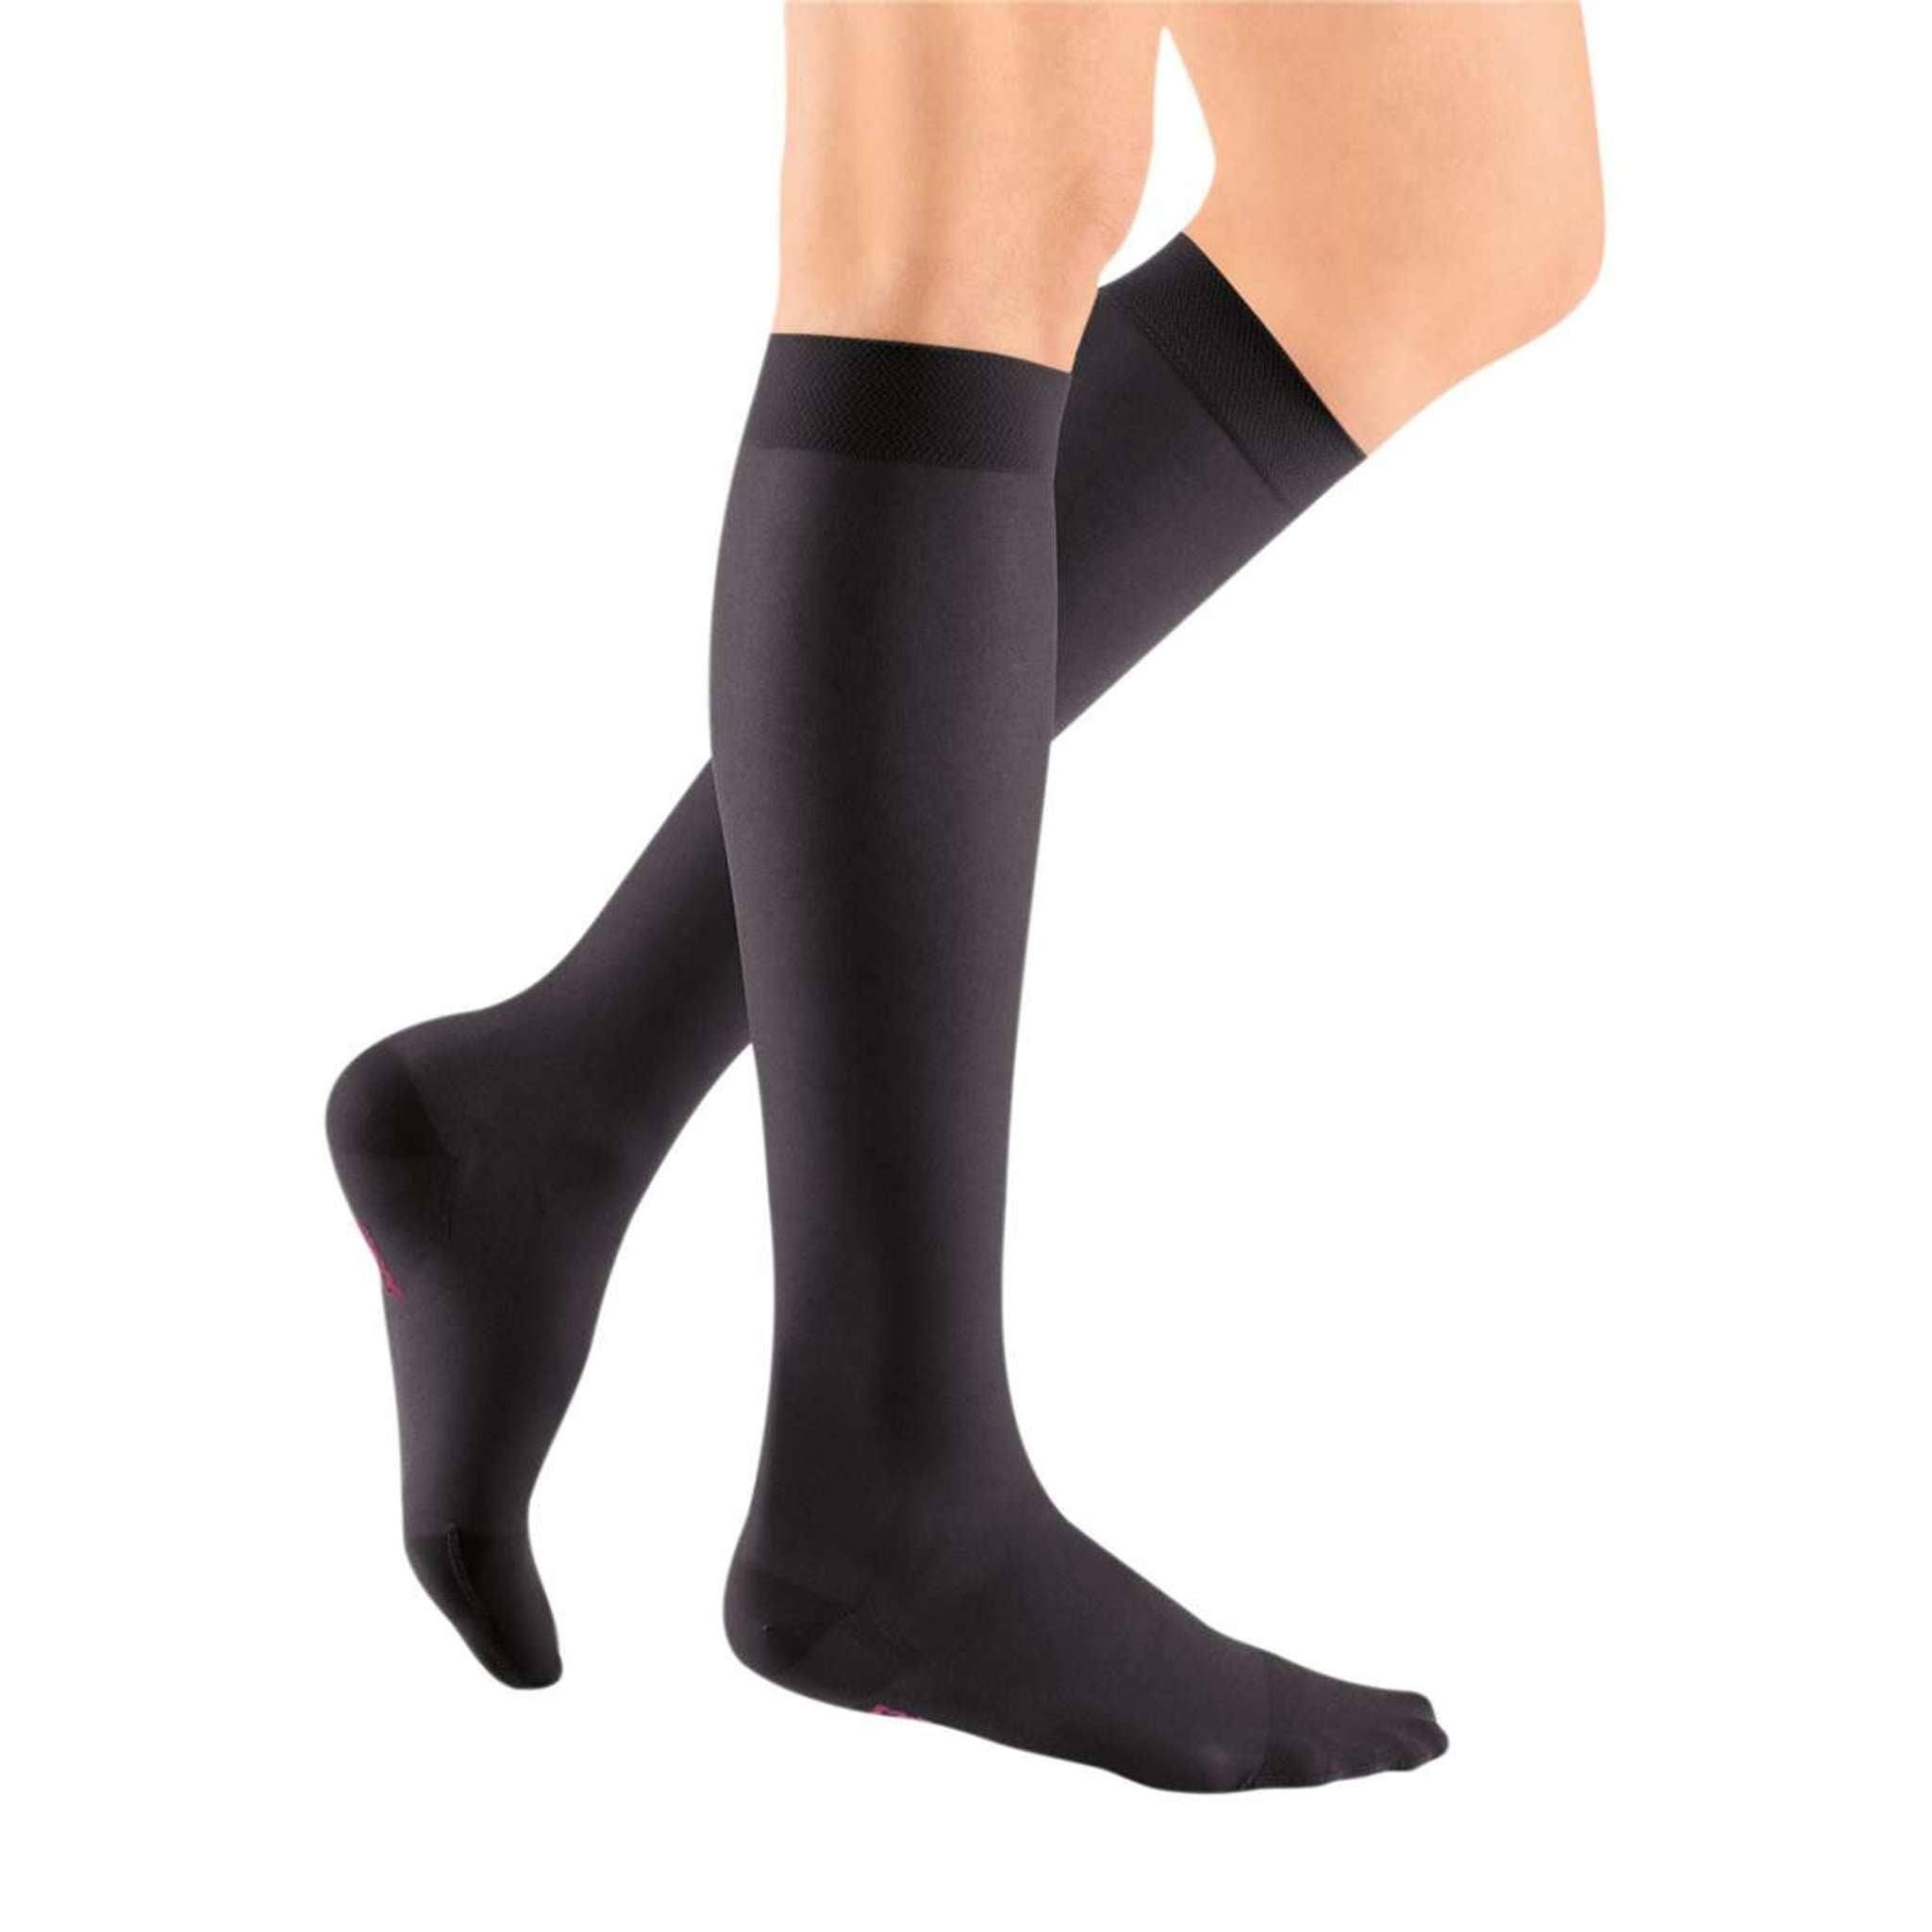 Mediven Women's Sheer & Soft Knee High Stocking - Ebony, 15-20mmHg